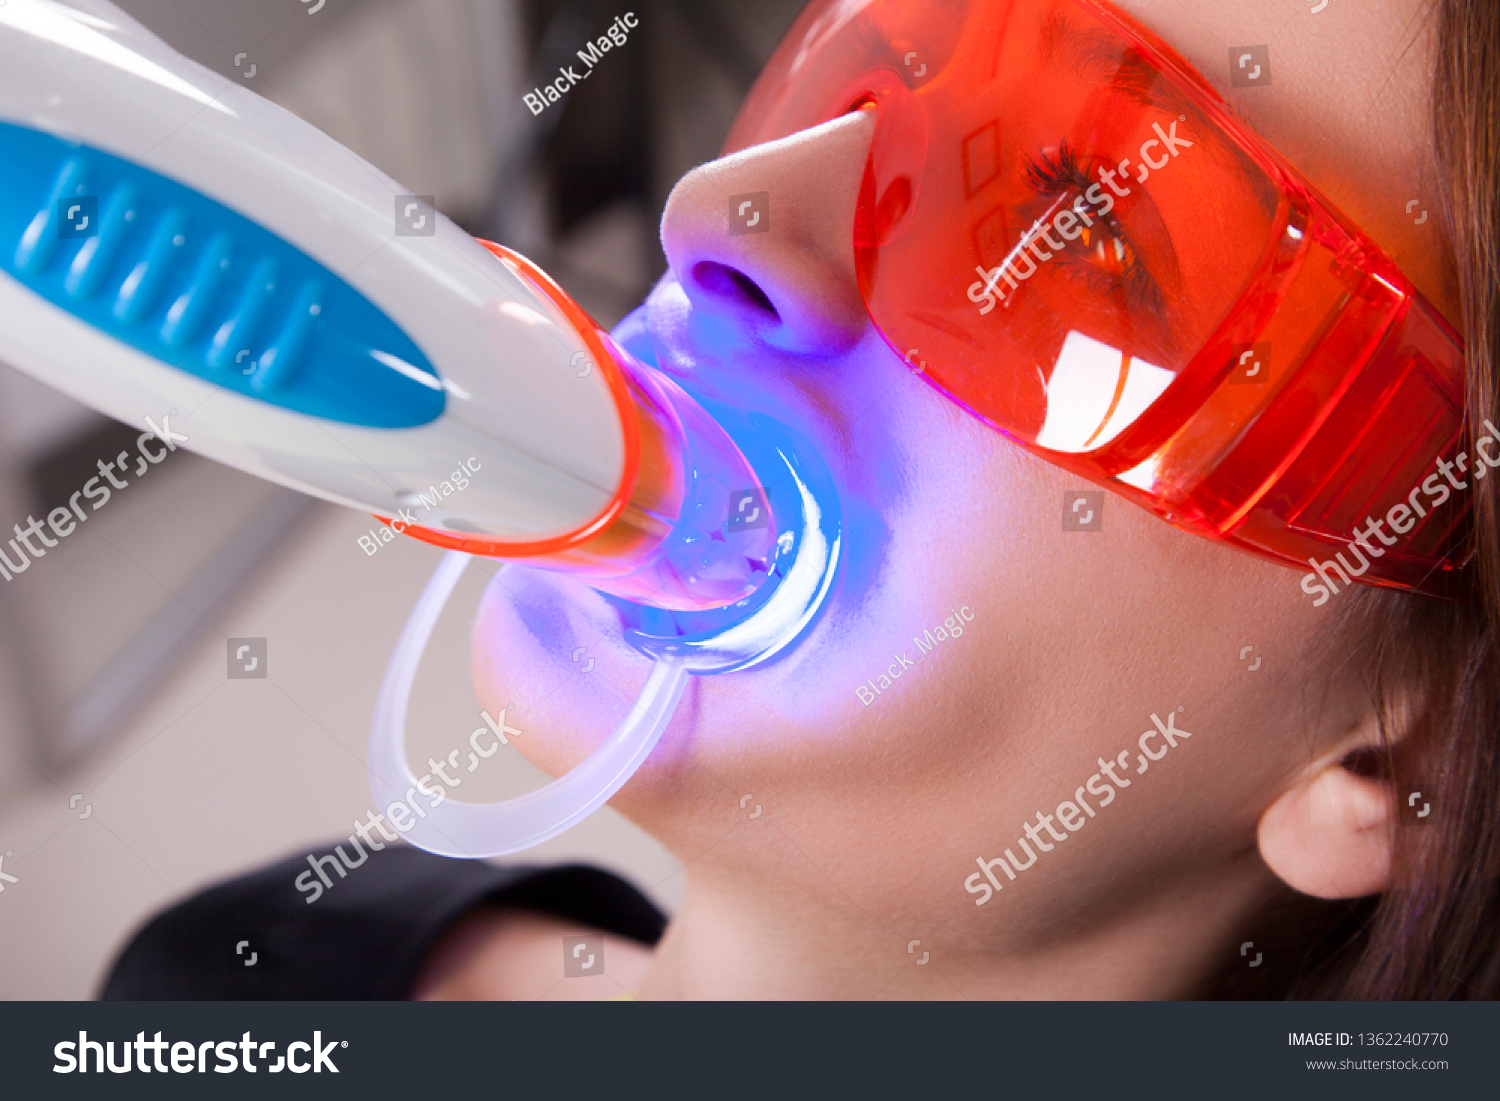 Teeth whitening process with ultraviolet UV light. #1362240770